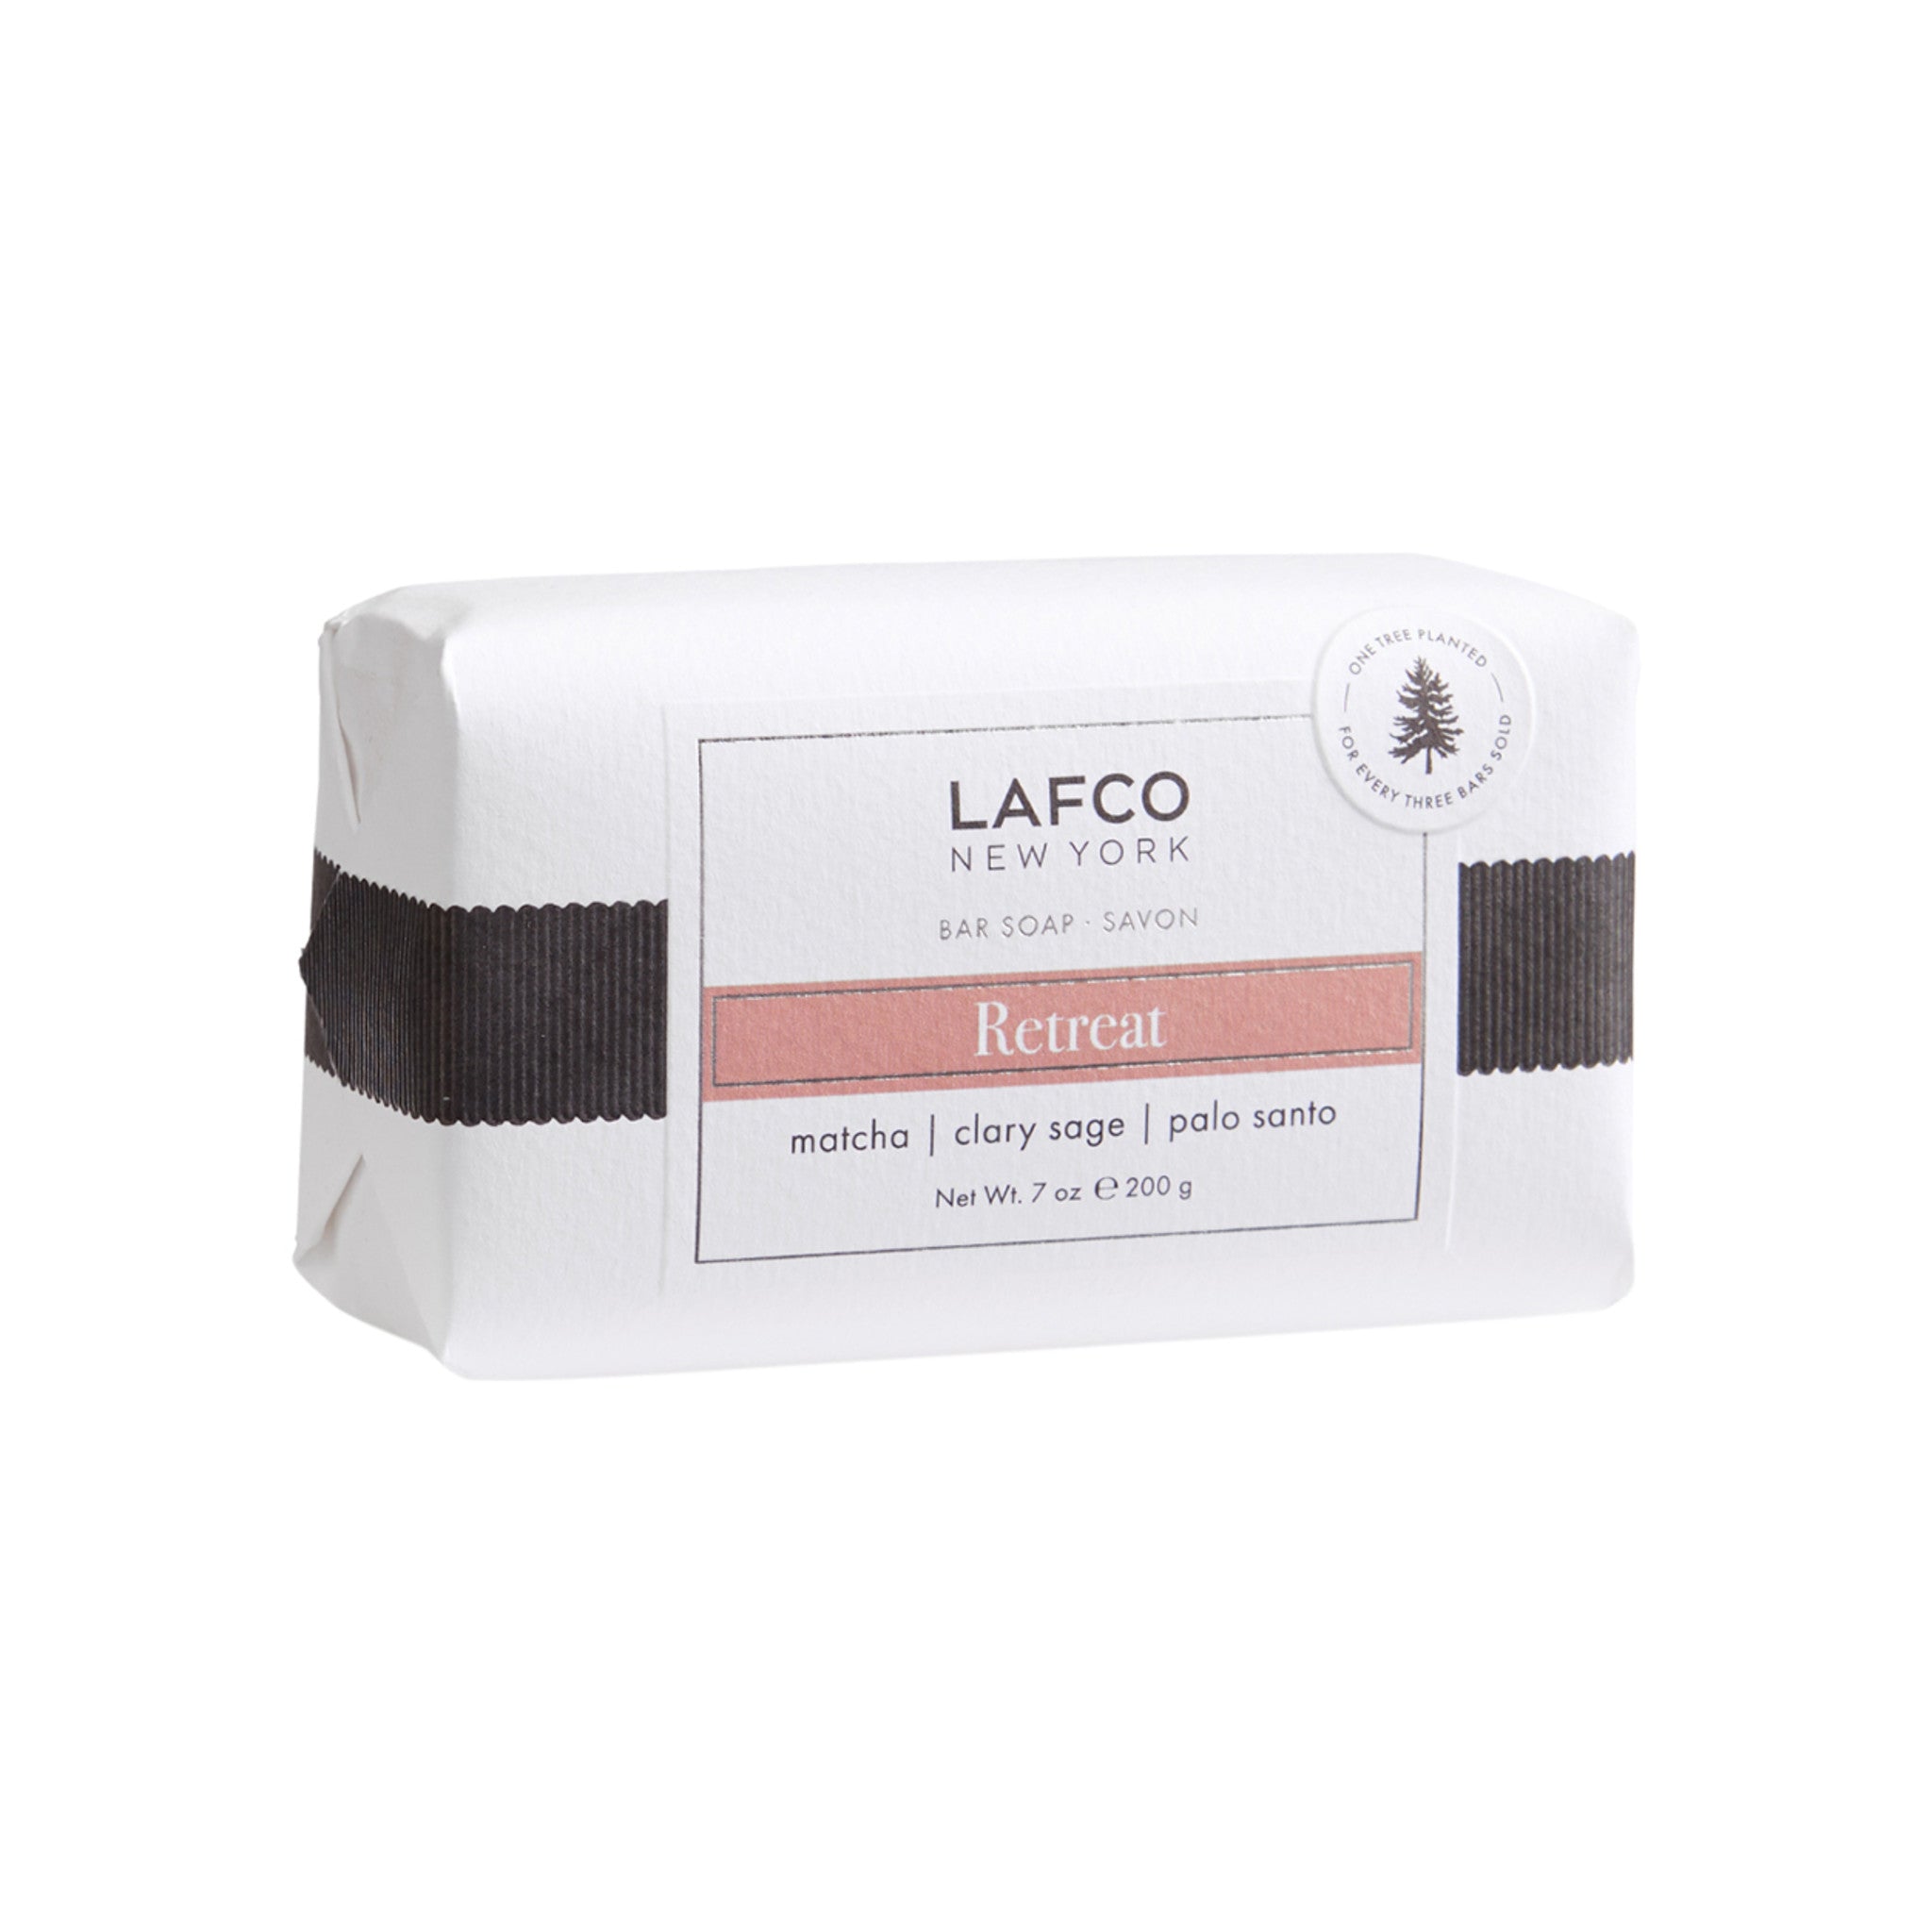 Lafco Retreat Bar Soap main image.